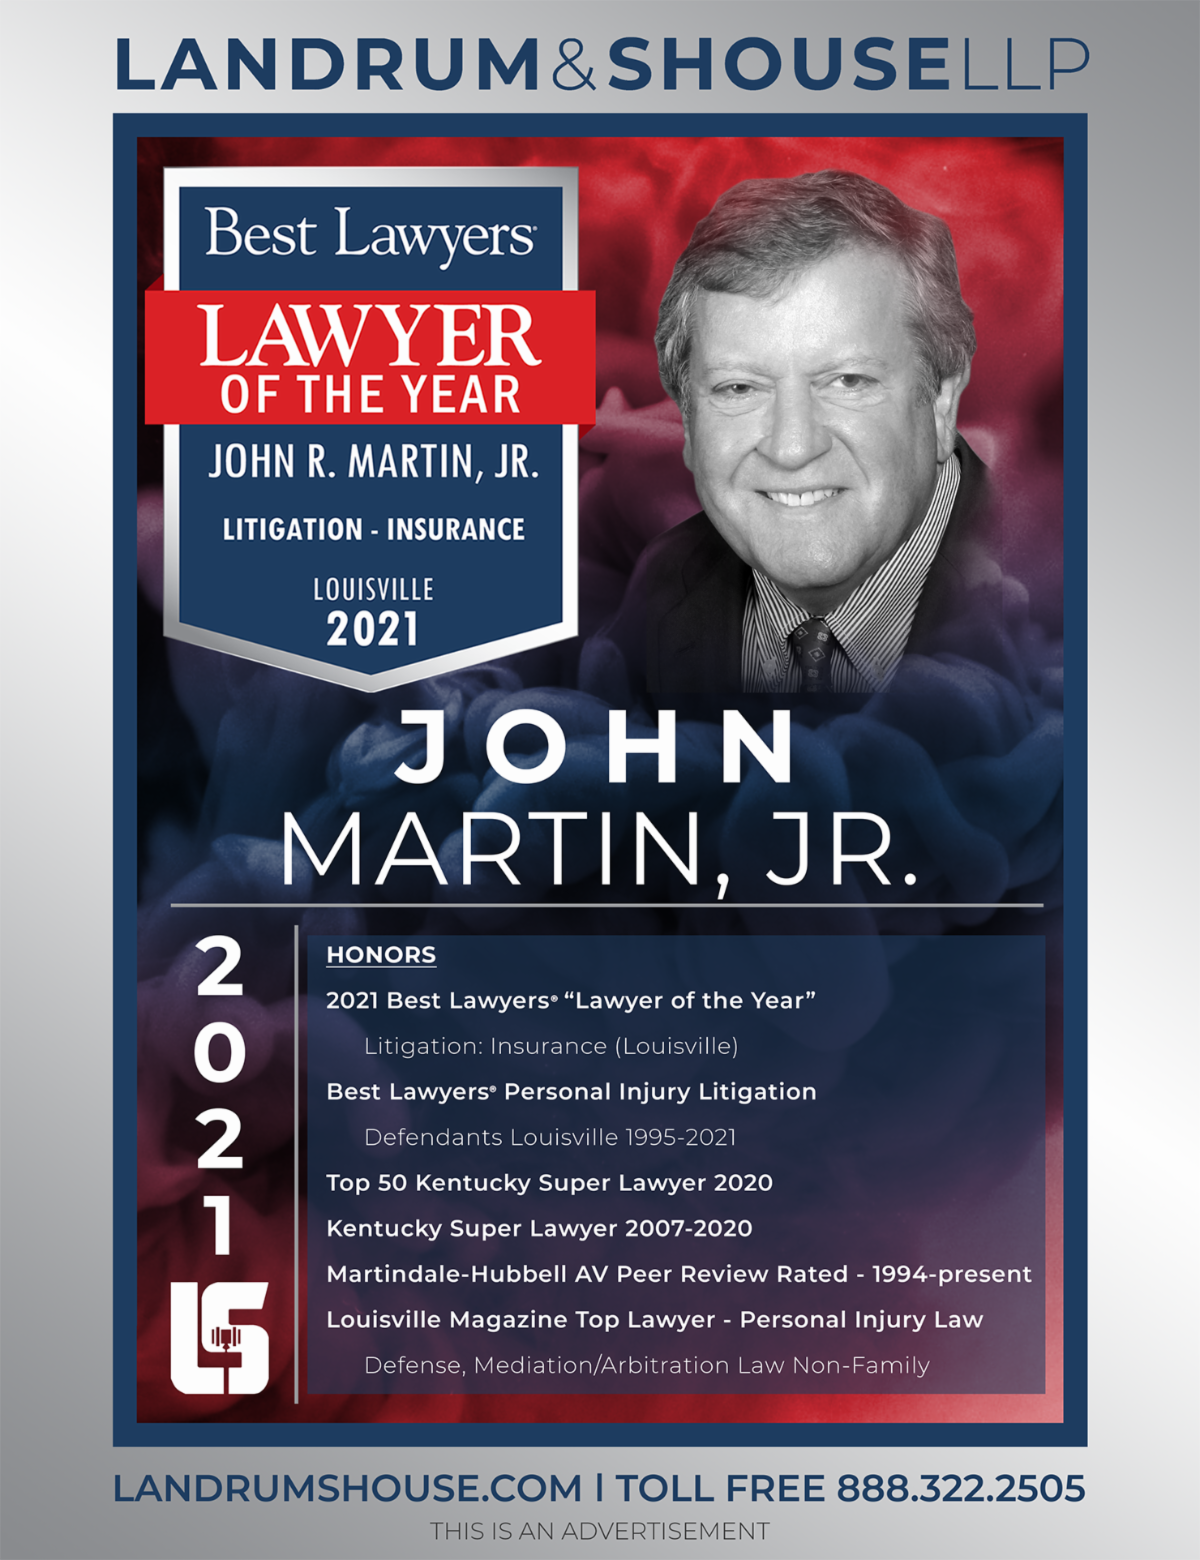 Landrum & Shouse LLP | Best Lawyers Lawyer Of The Year | John R. Martin, Jr. Litigation - Insurance Louisville 2021